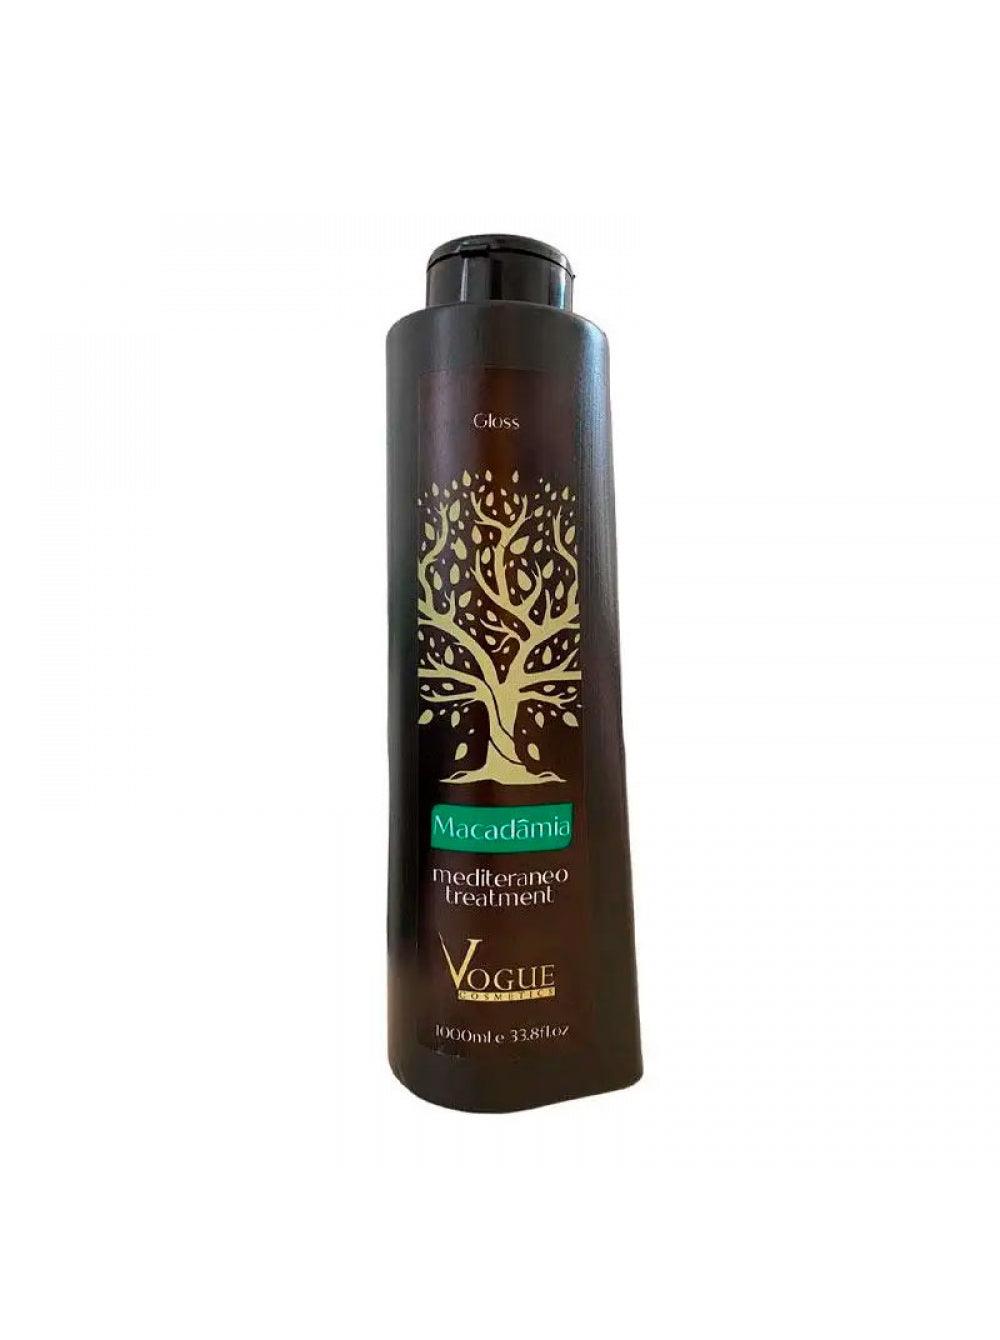 Vogue, Macadamia Mediterraneo Treatment Gloss, Restoring Conditioner For Hair, 1L - BUY BRAZIL STORE